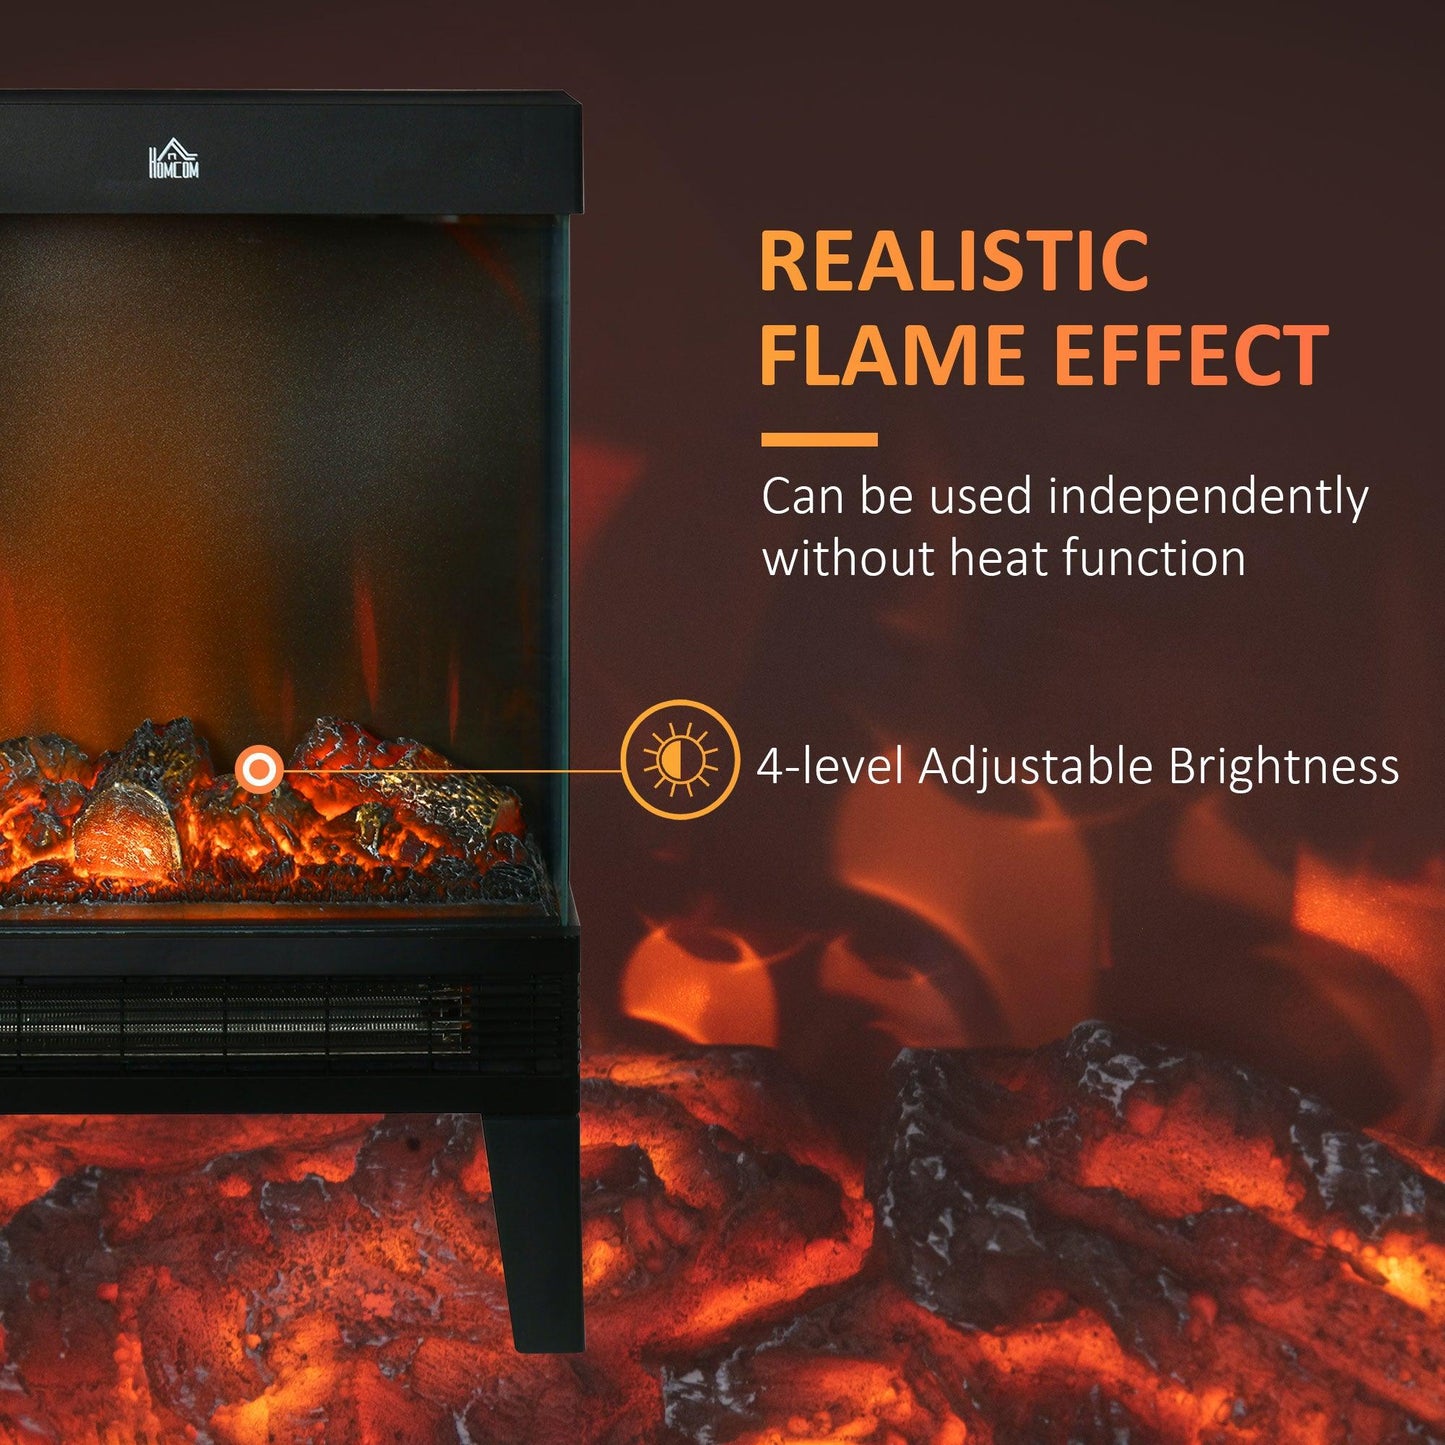 HOMCOM 180° Charming Electric Fireplace Heater, Quiet Freestanding Stove, Black - ALL4U RETAILER LTD